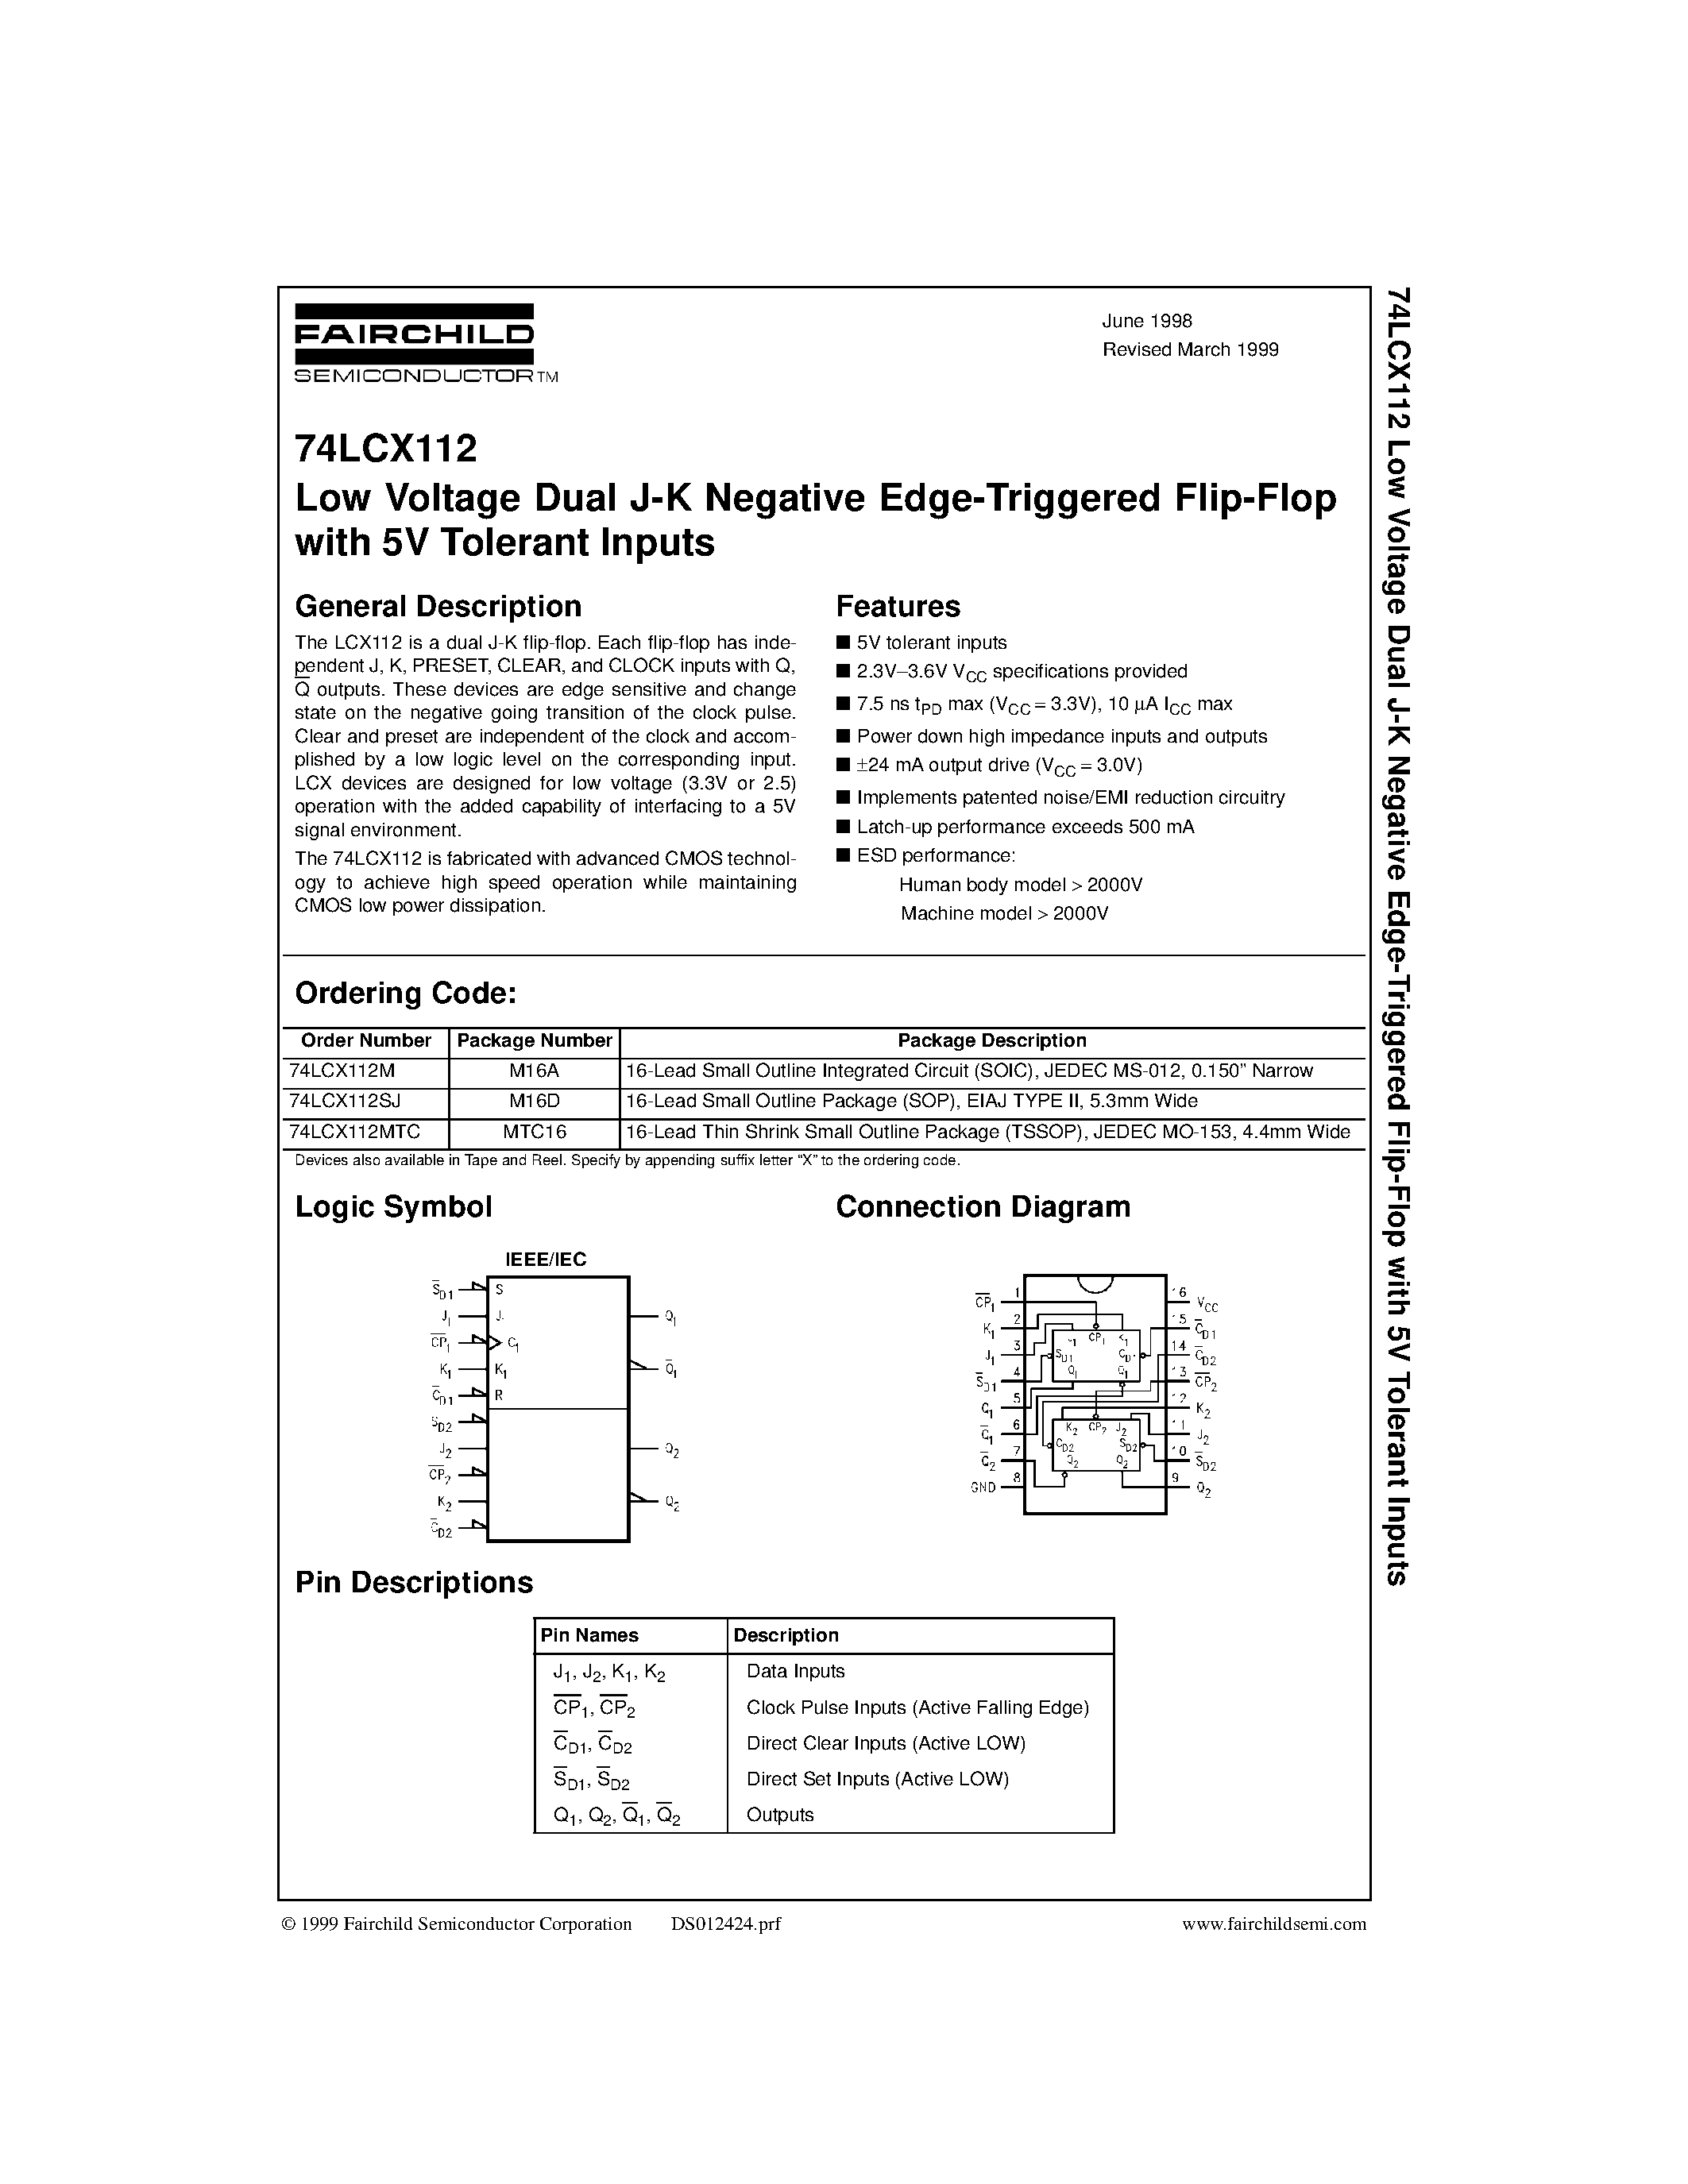 Даташит 74LCX112 - Low Voltage Dual J-K Negative Edge-Triggered Flip-Flop with 5V Tolerant Inputs страница 1